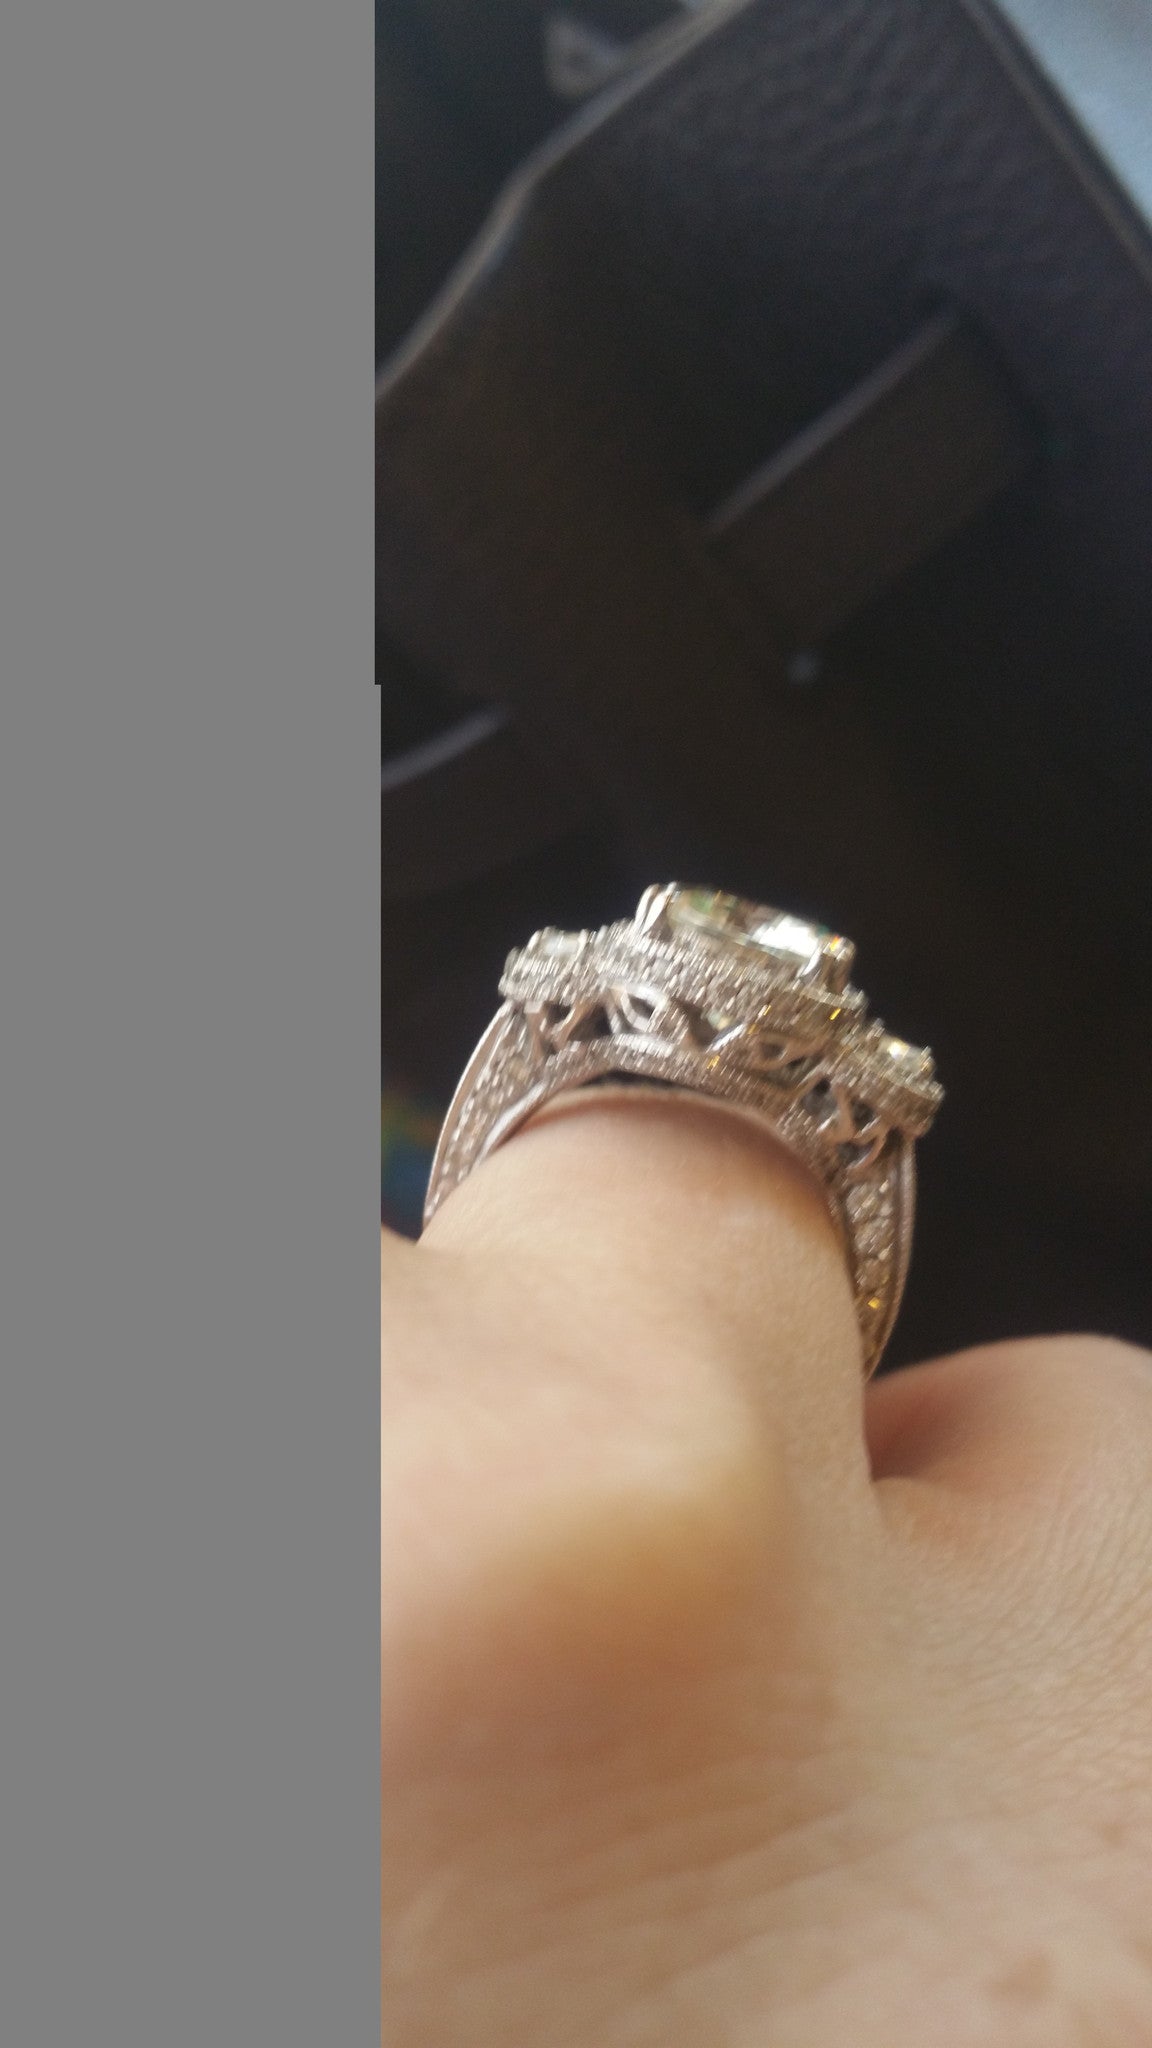 5.50ct Cushion Moissanite & Diamond Engagement ring  Platinum Anniversary Bridal Gift JEWELFORME BLUE